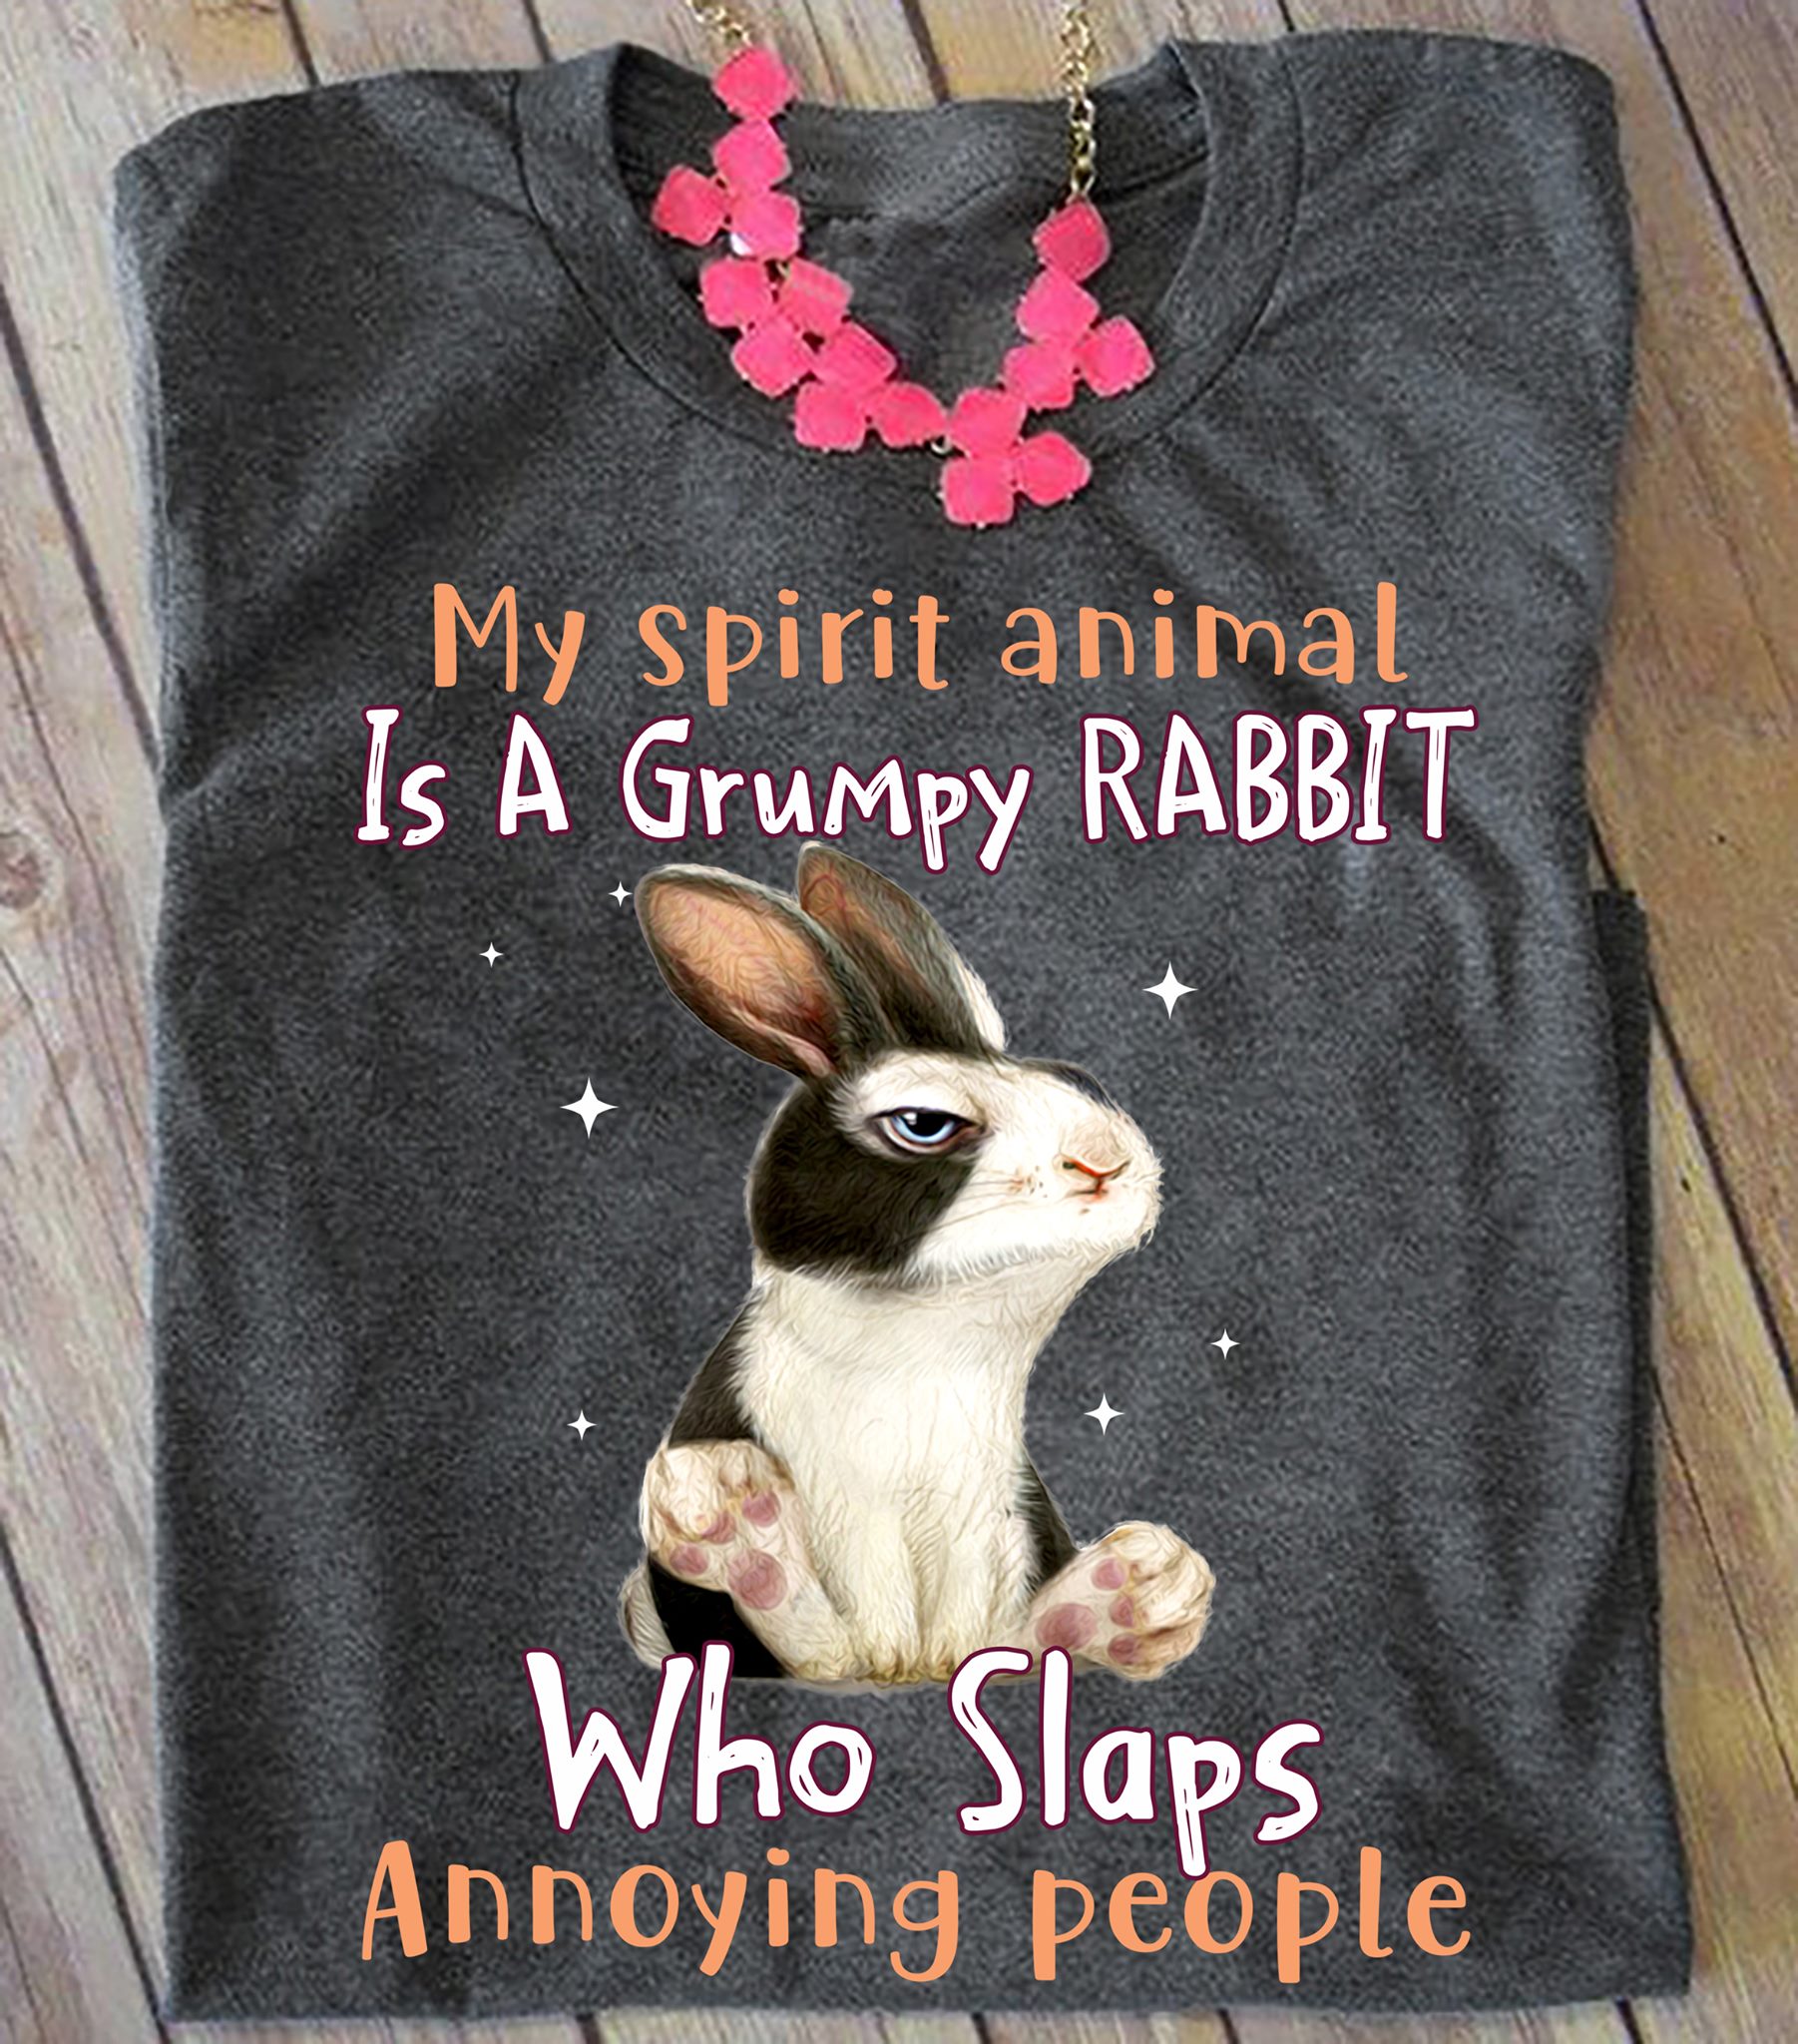 My spirit animal is a grumpy rabbit who slaps annoying people